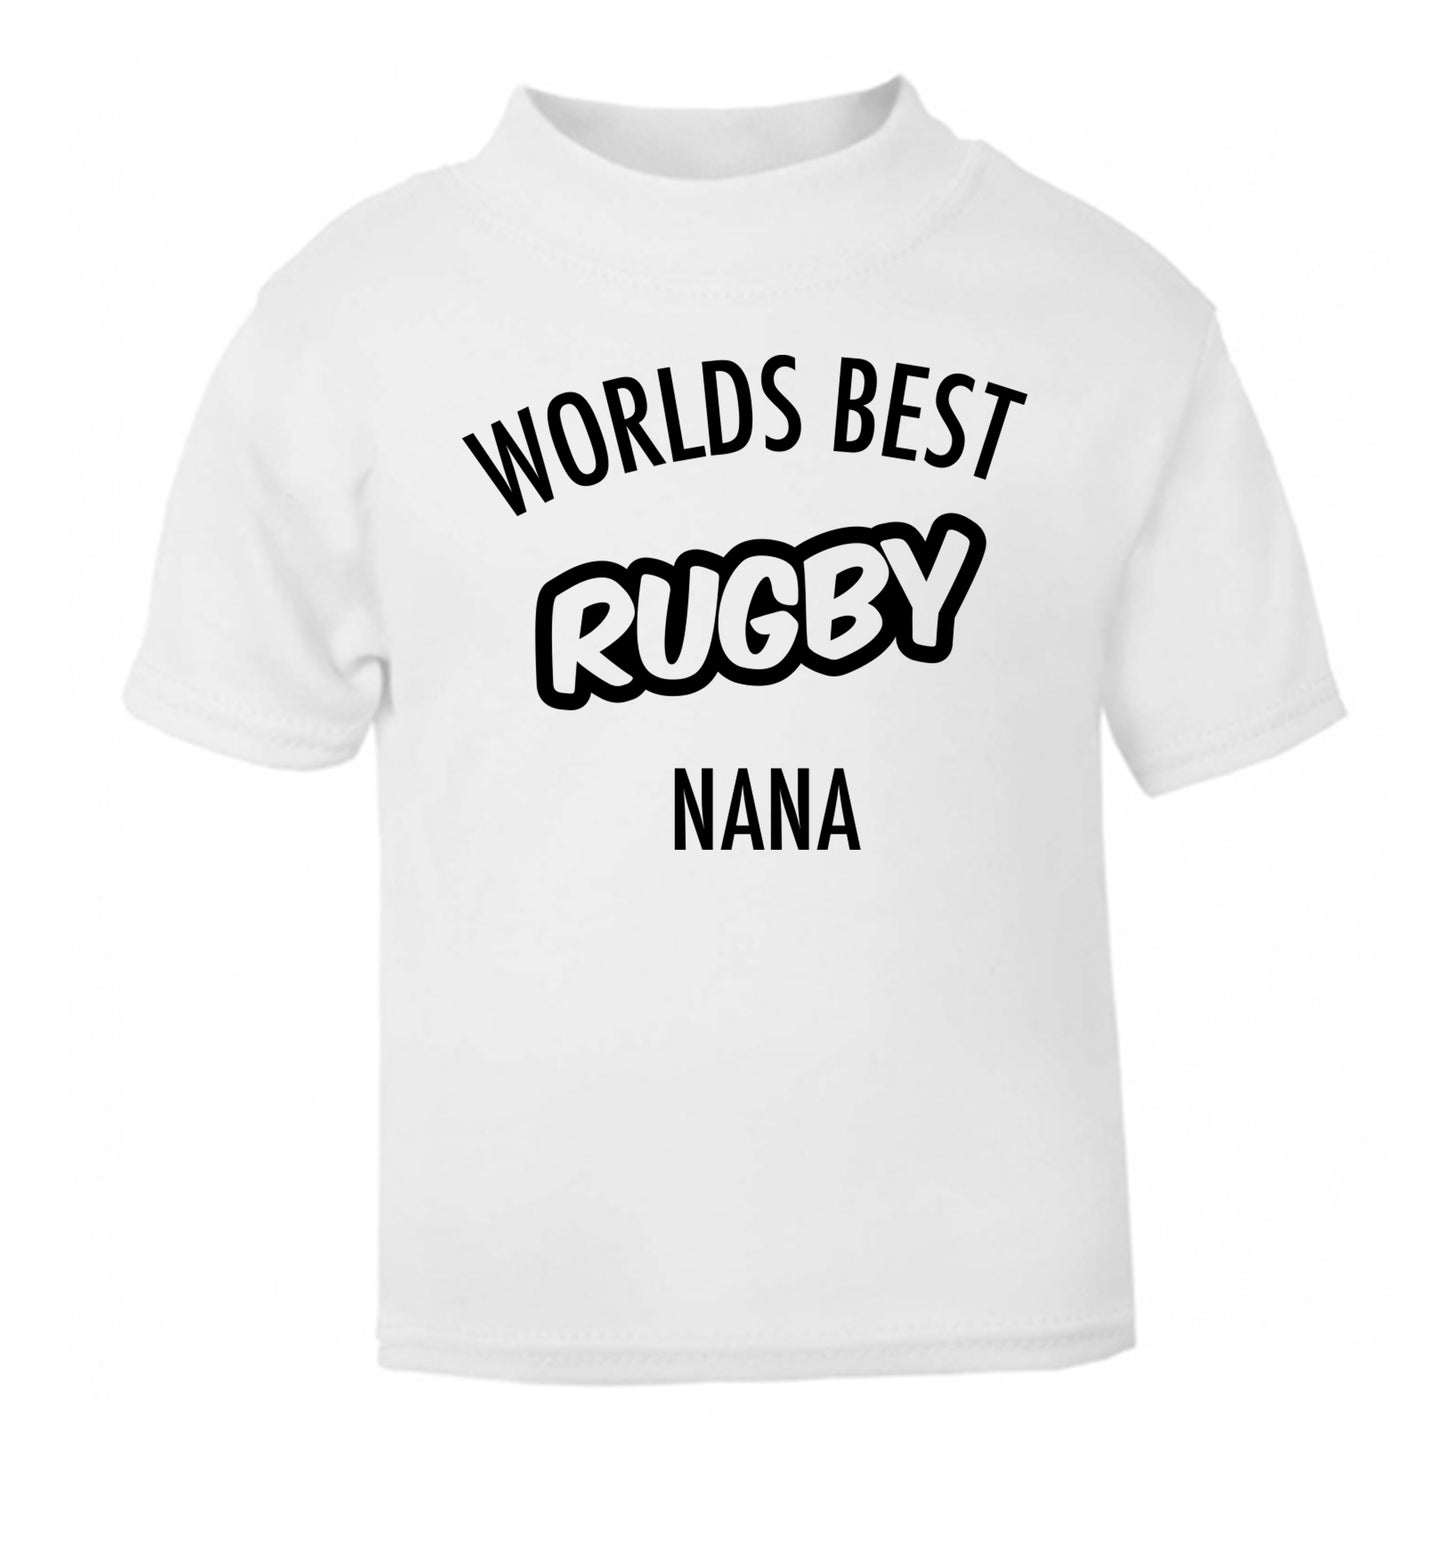 Worlds Best Rugby Grandma white Baby Toddler Tshirt 2 Years